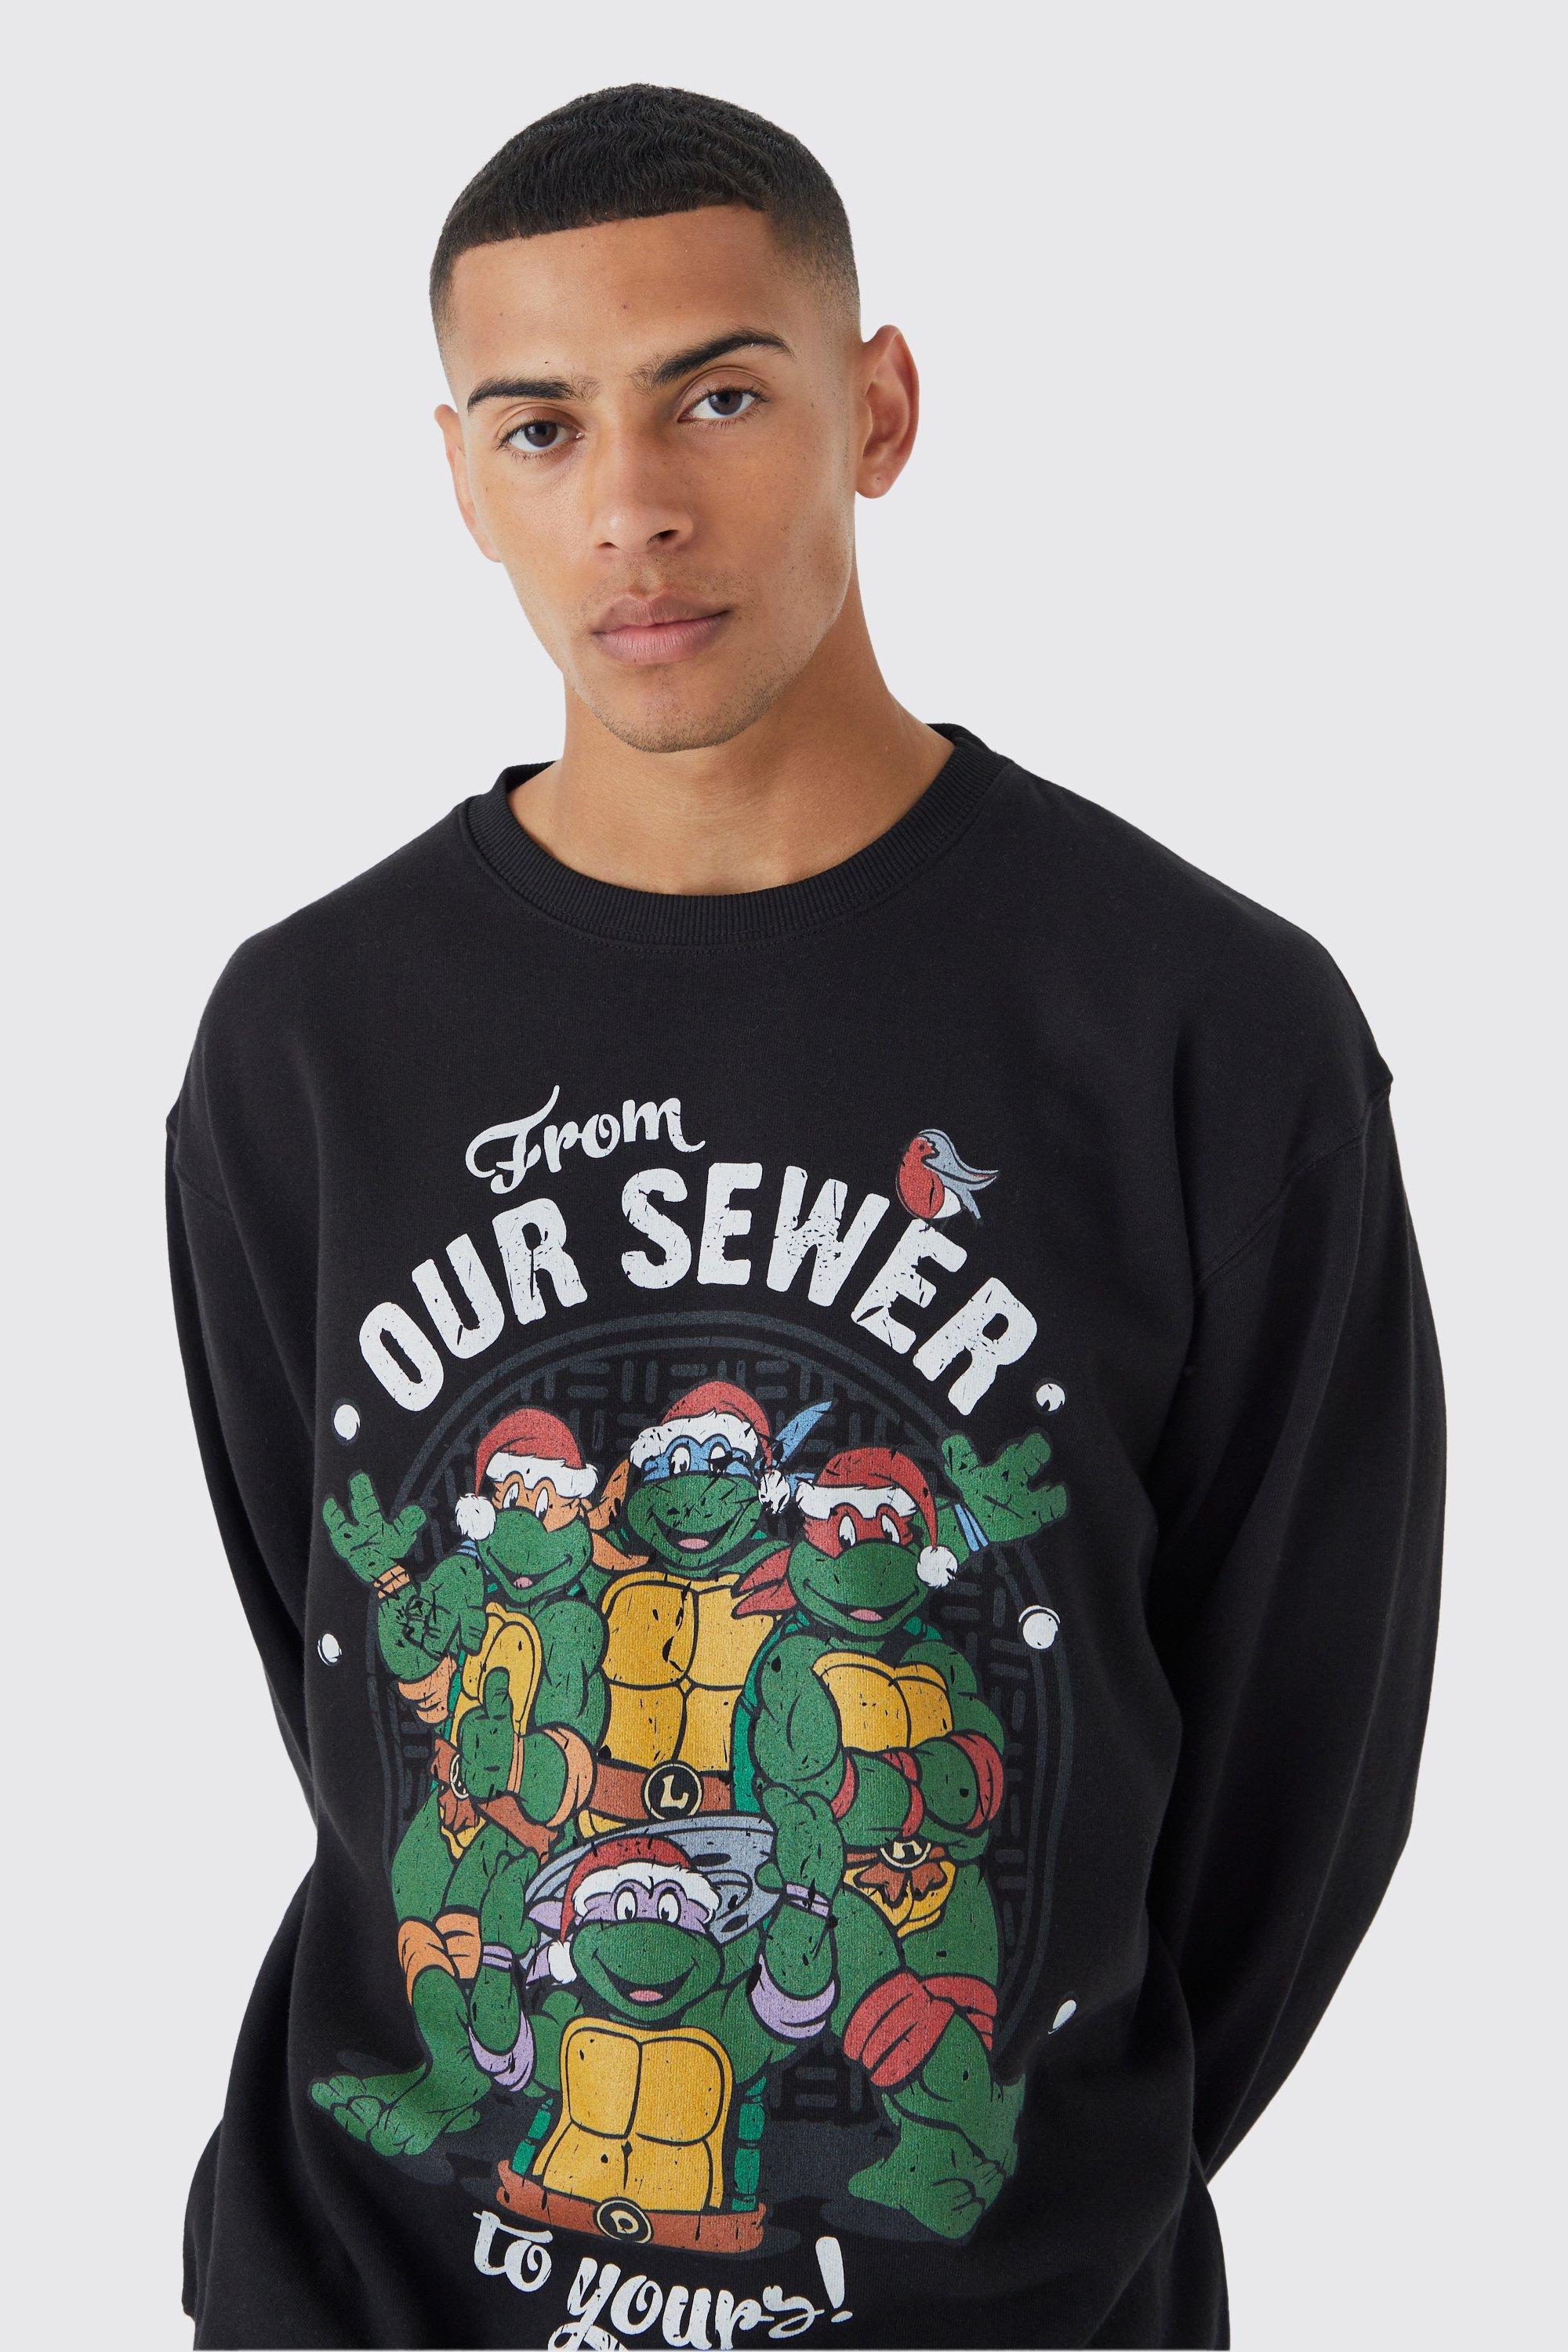 https://media.boohoo.com/i/boohoo/bmm72659_black_xl_2/male-black-oversized-christmas-tmnt-license-sweatshirt